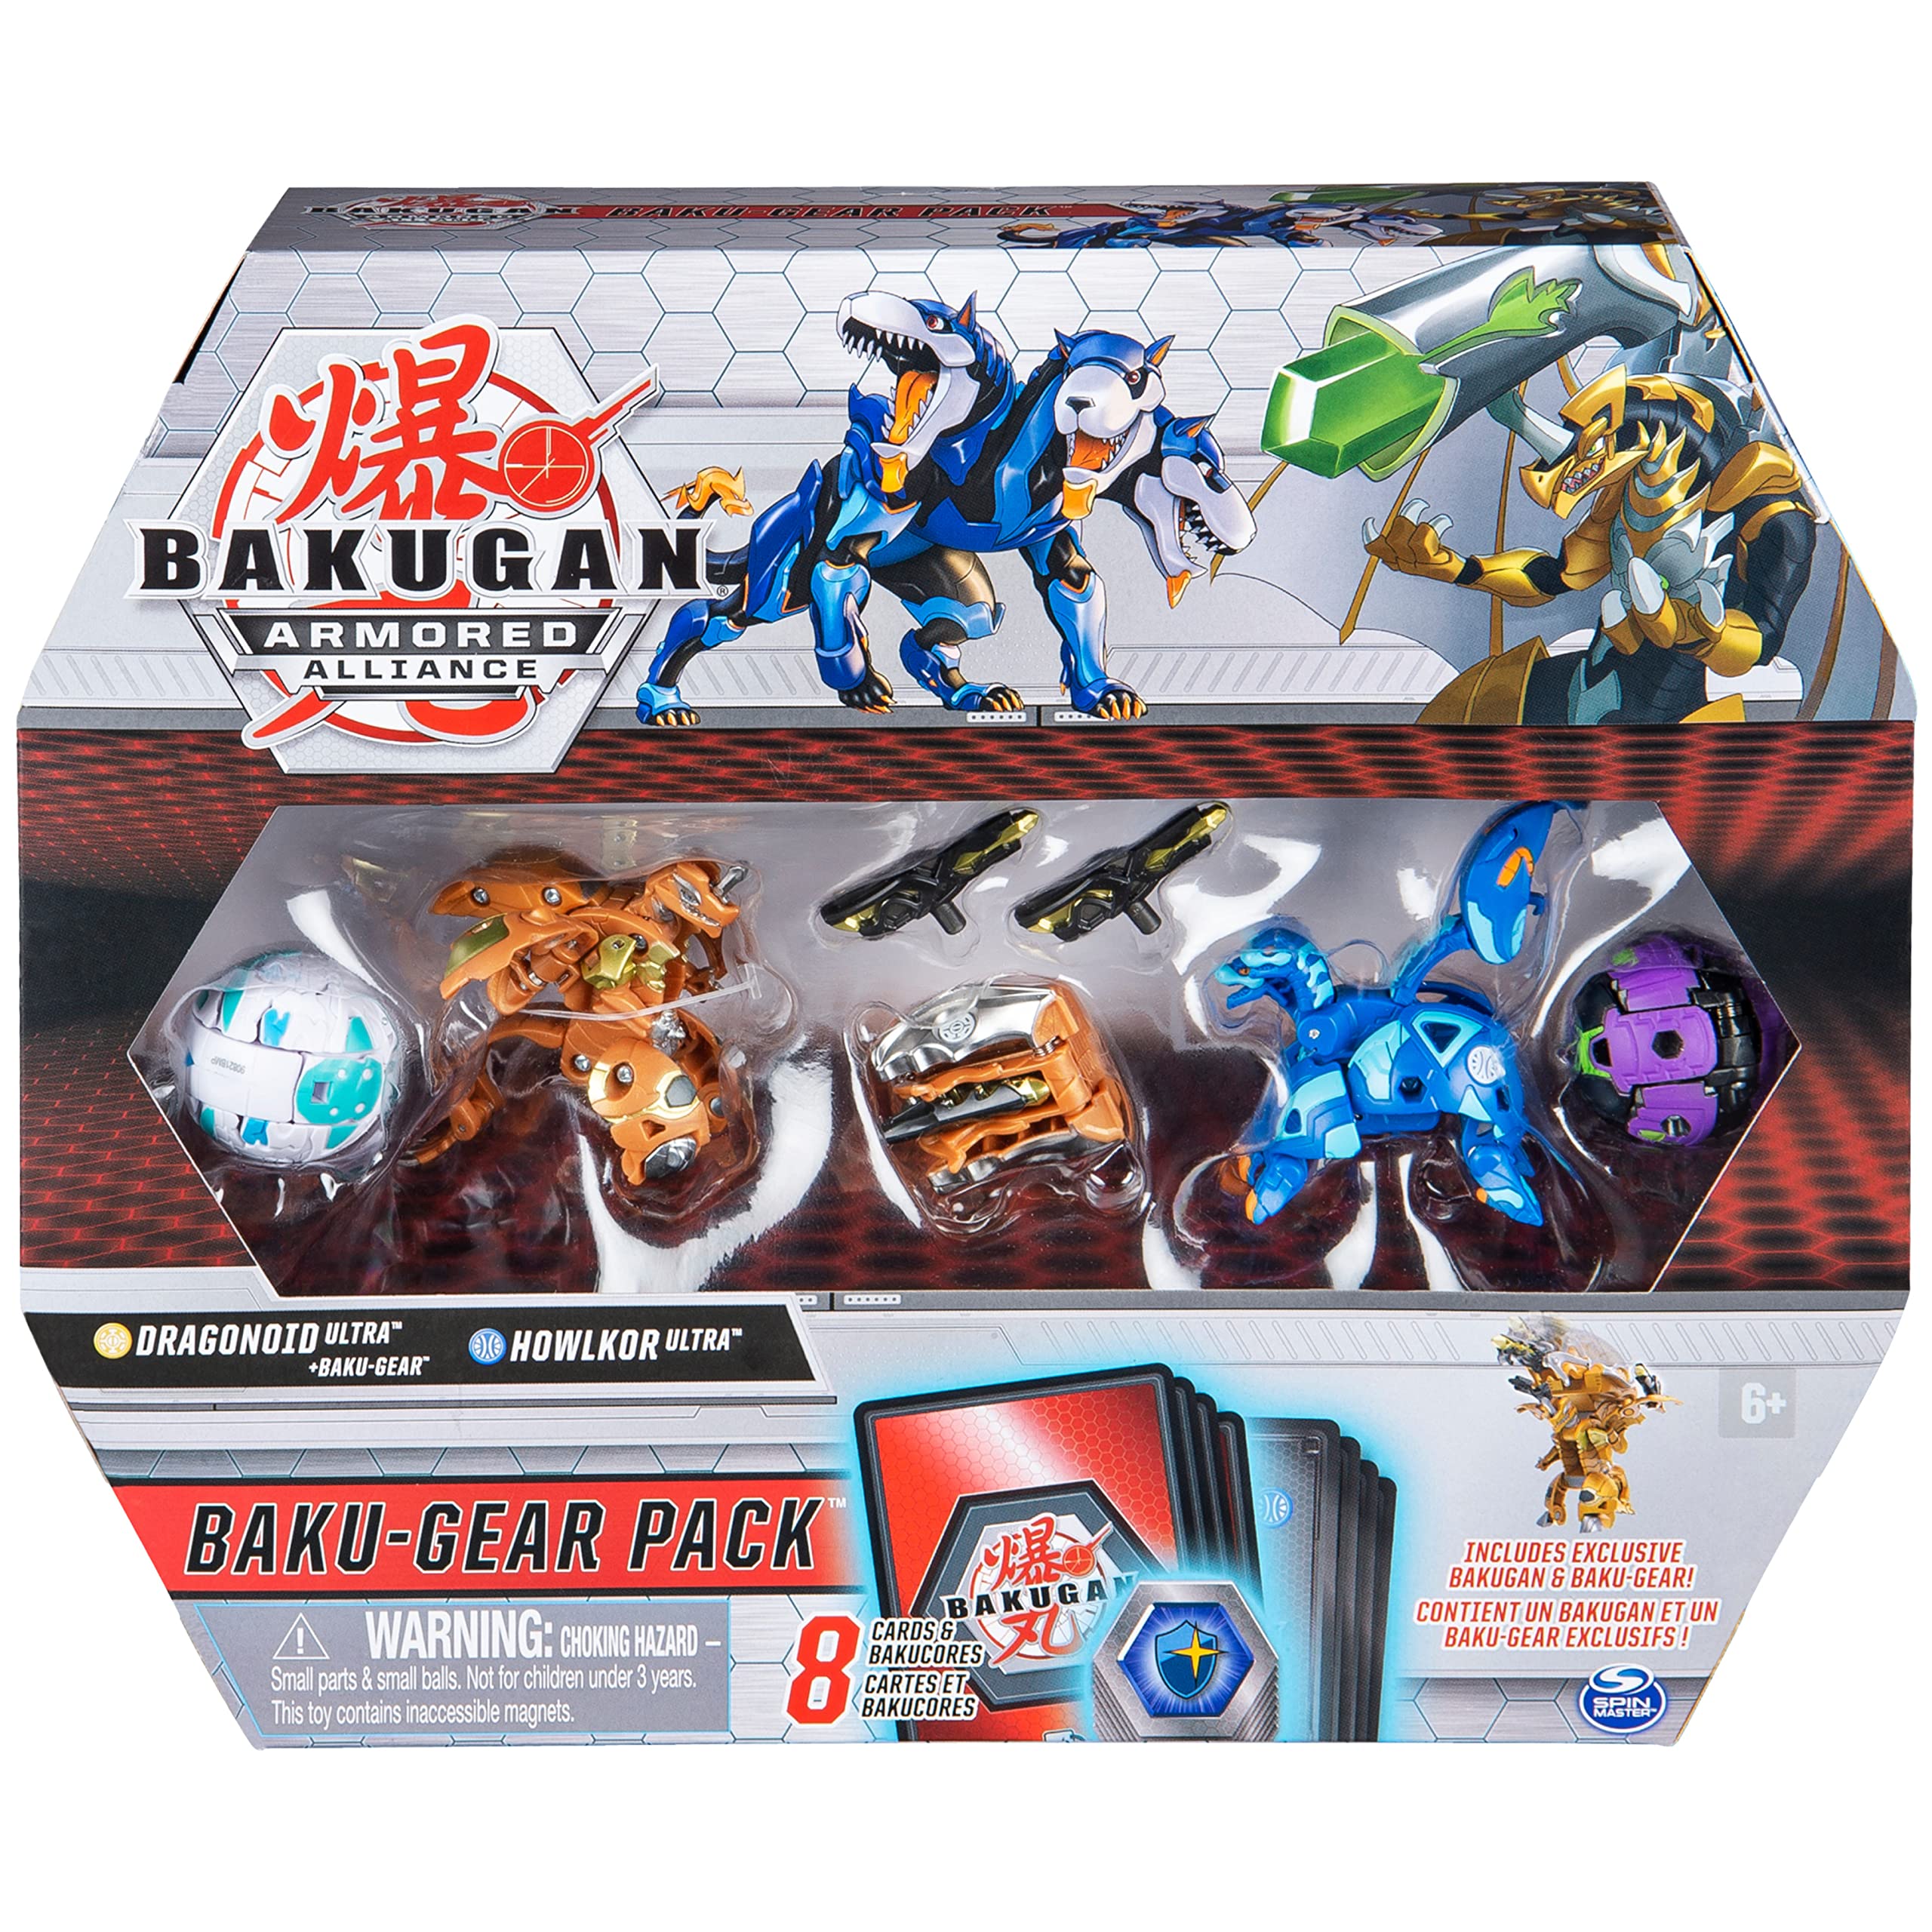 Bakugan Baku-Gear 4-Pack, Dragonoid Ultra with Baku-Gear and Howlkor Ultra, Collectible Action Figures, Kids Toys for Boys